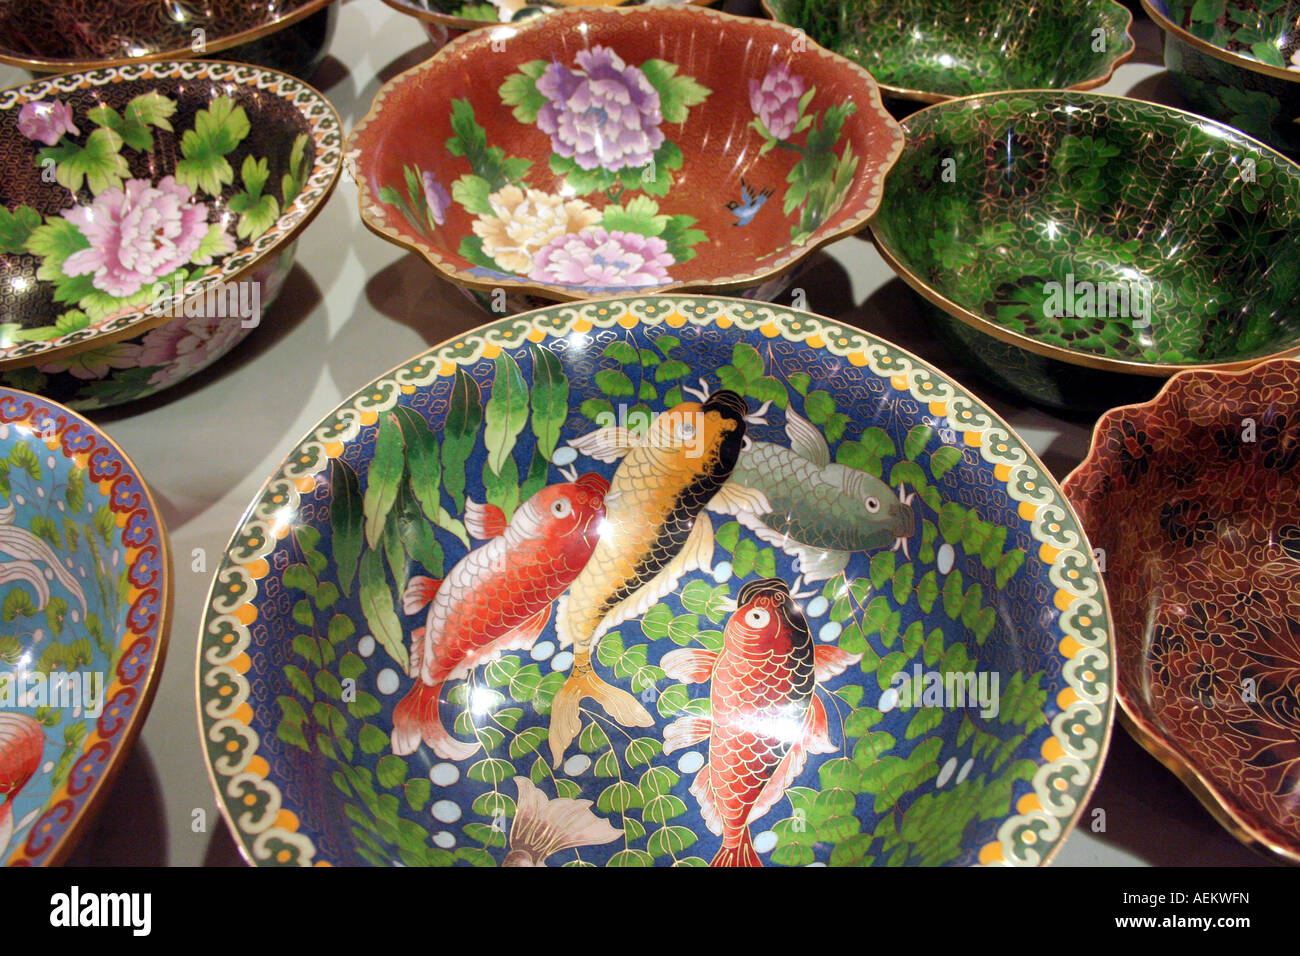 Very fine decorative bowl. Stock Photo